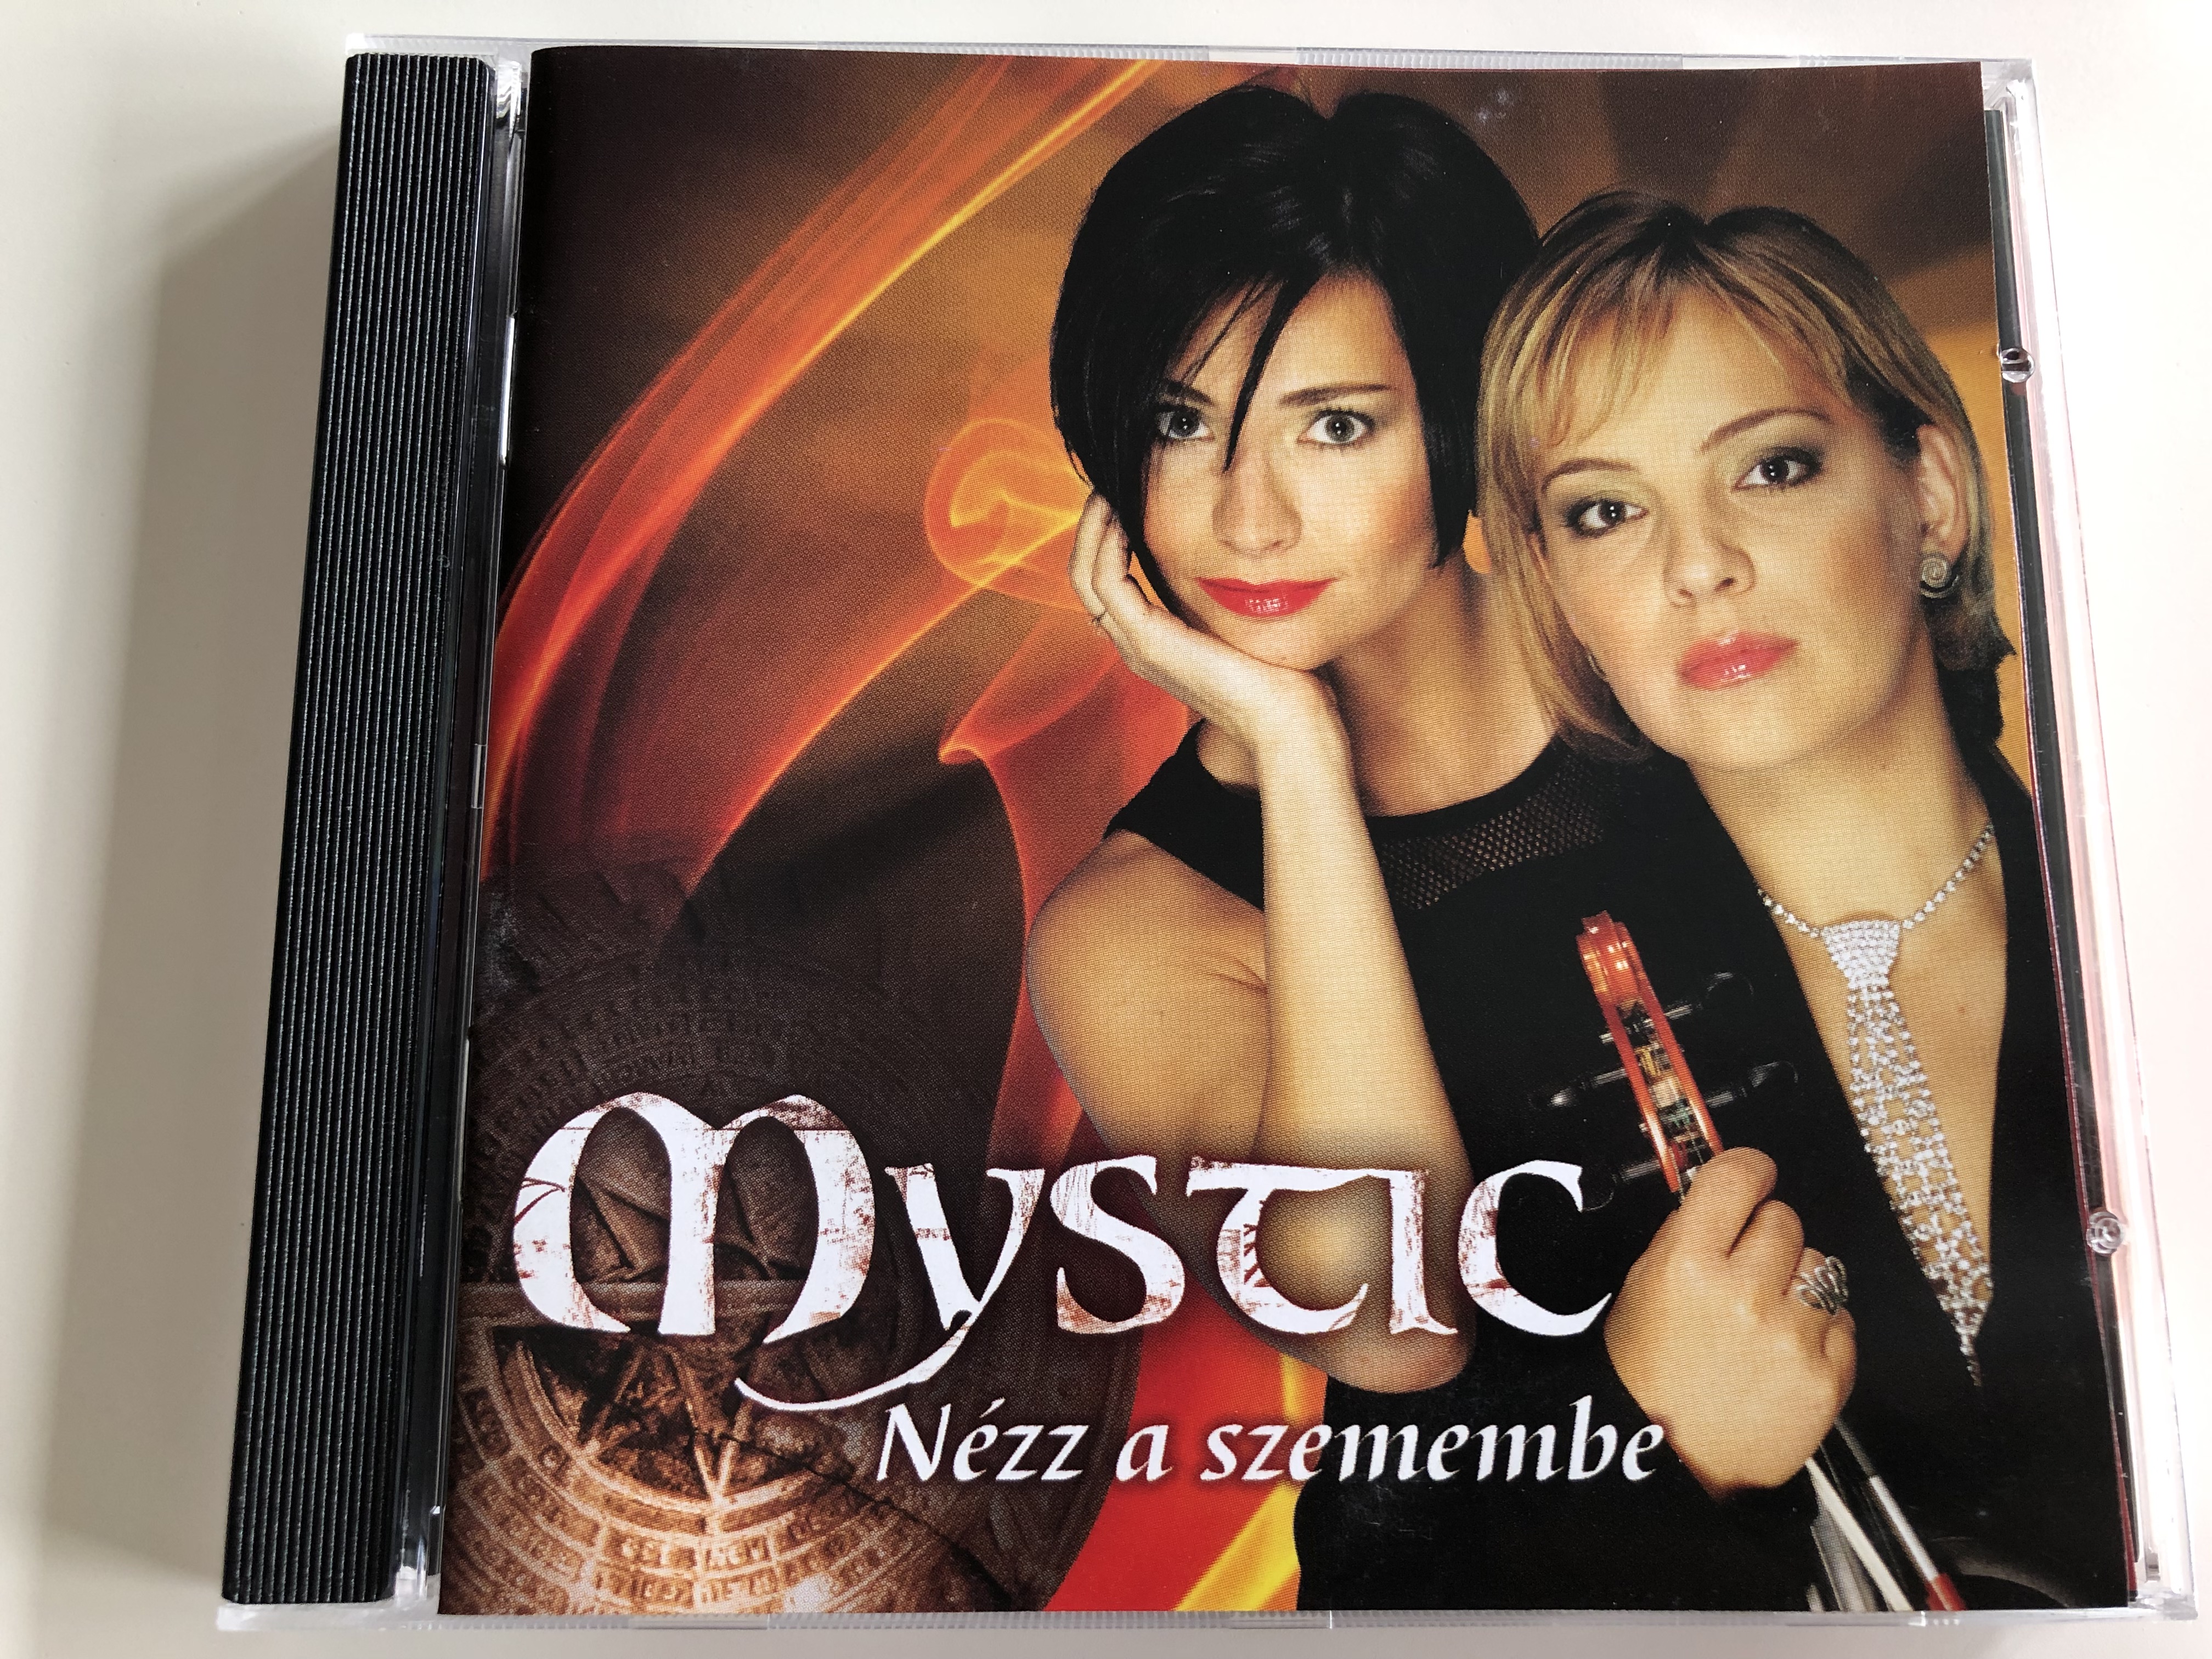 mystic-n-zz-a-szemembe-no-b-rk-ja-audio-cd-2005-1-.jpg